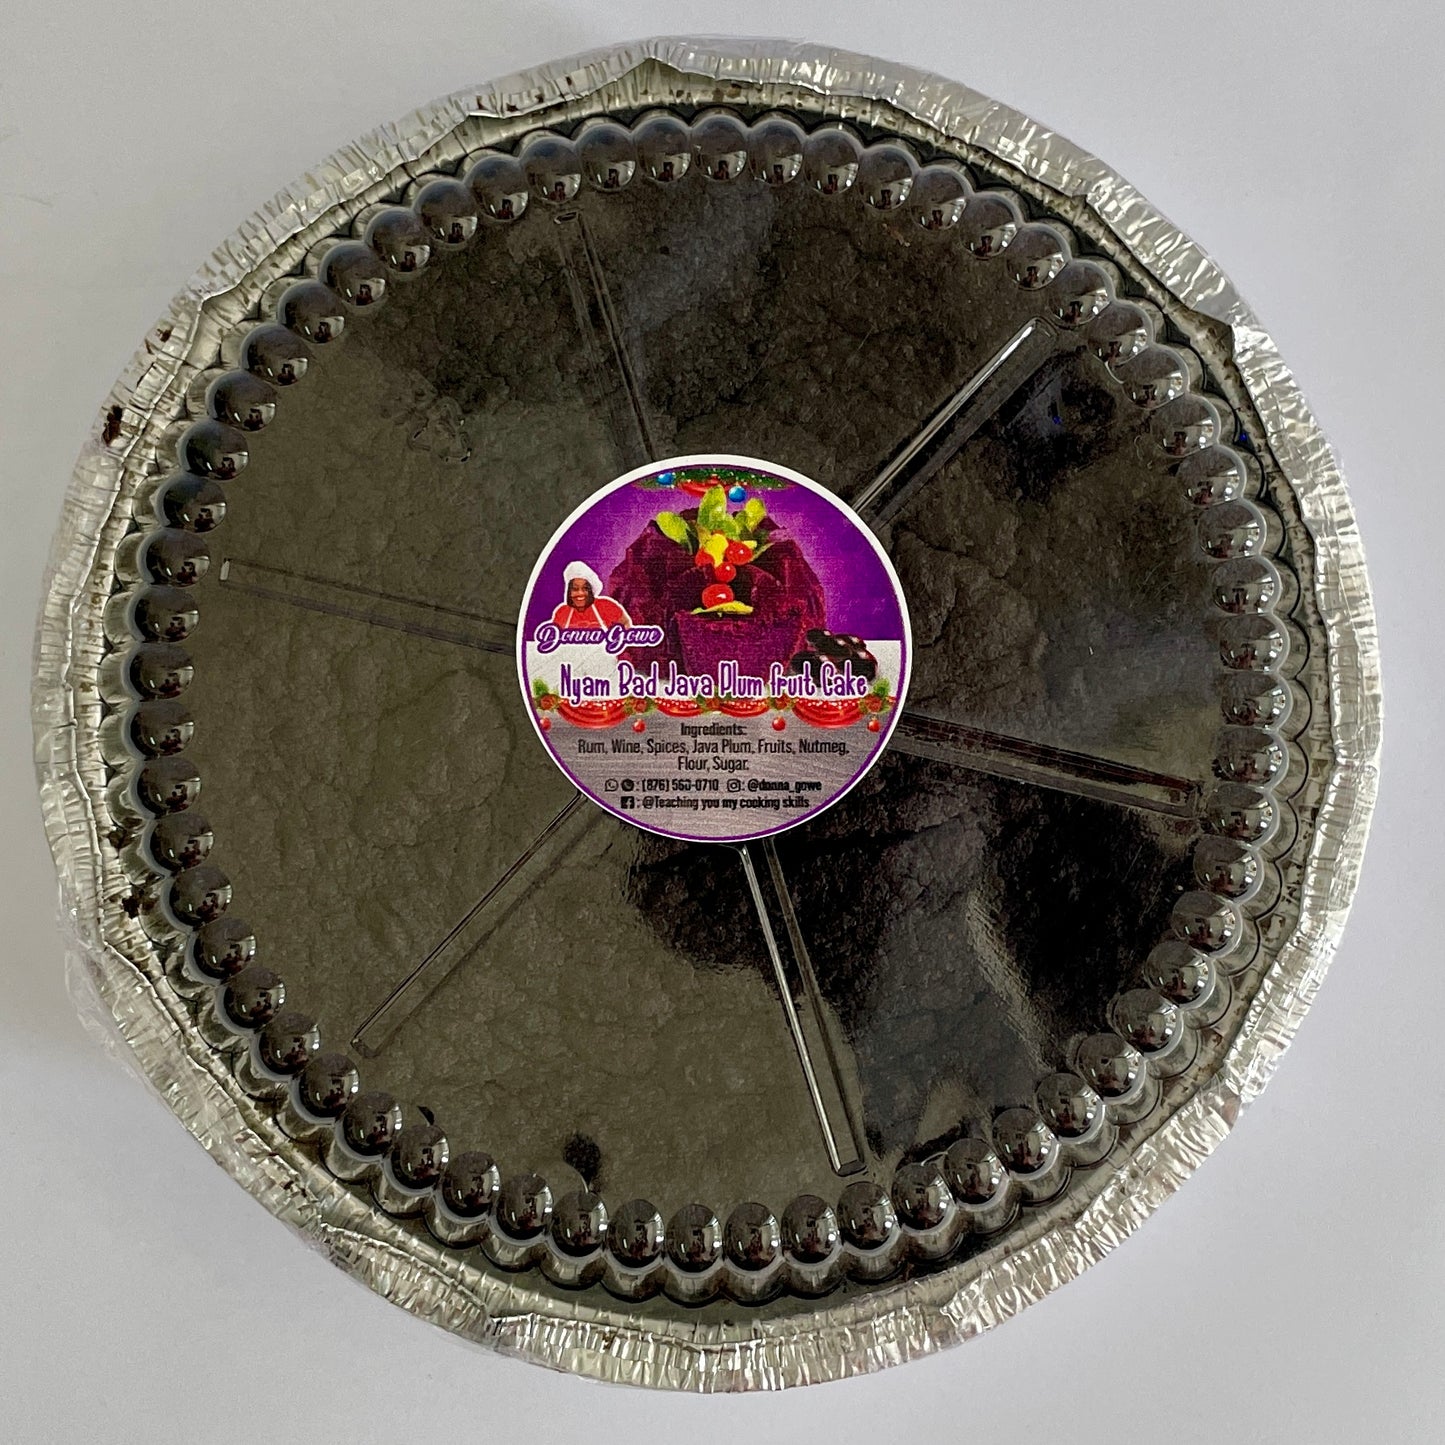 Nyam Bad Java Plum Fruit Cake [Express Shipping Recommended]